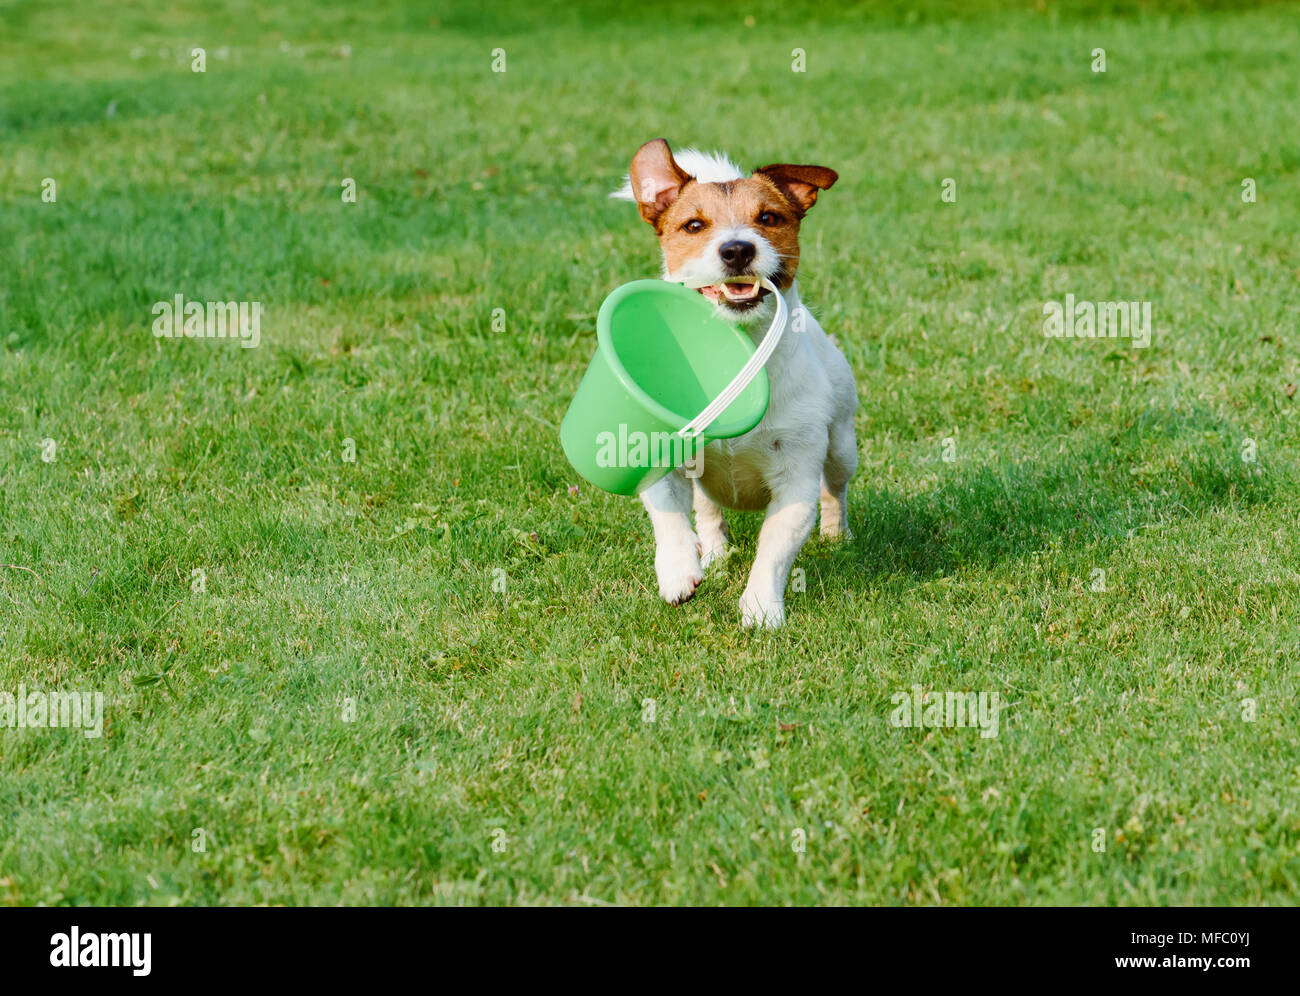 Friendly dog fetches a bucket at green grass garden lawn Stock Photo